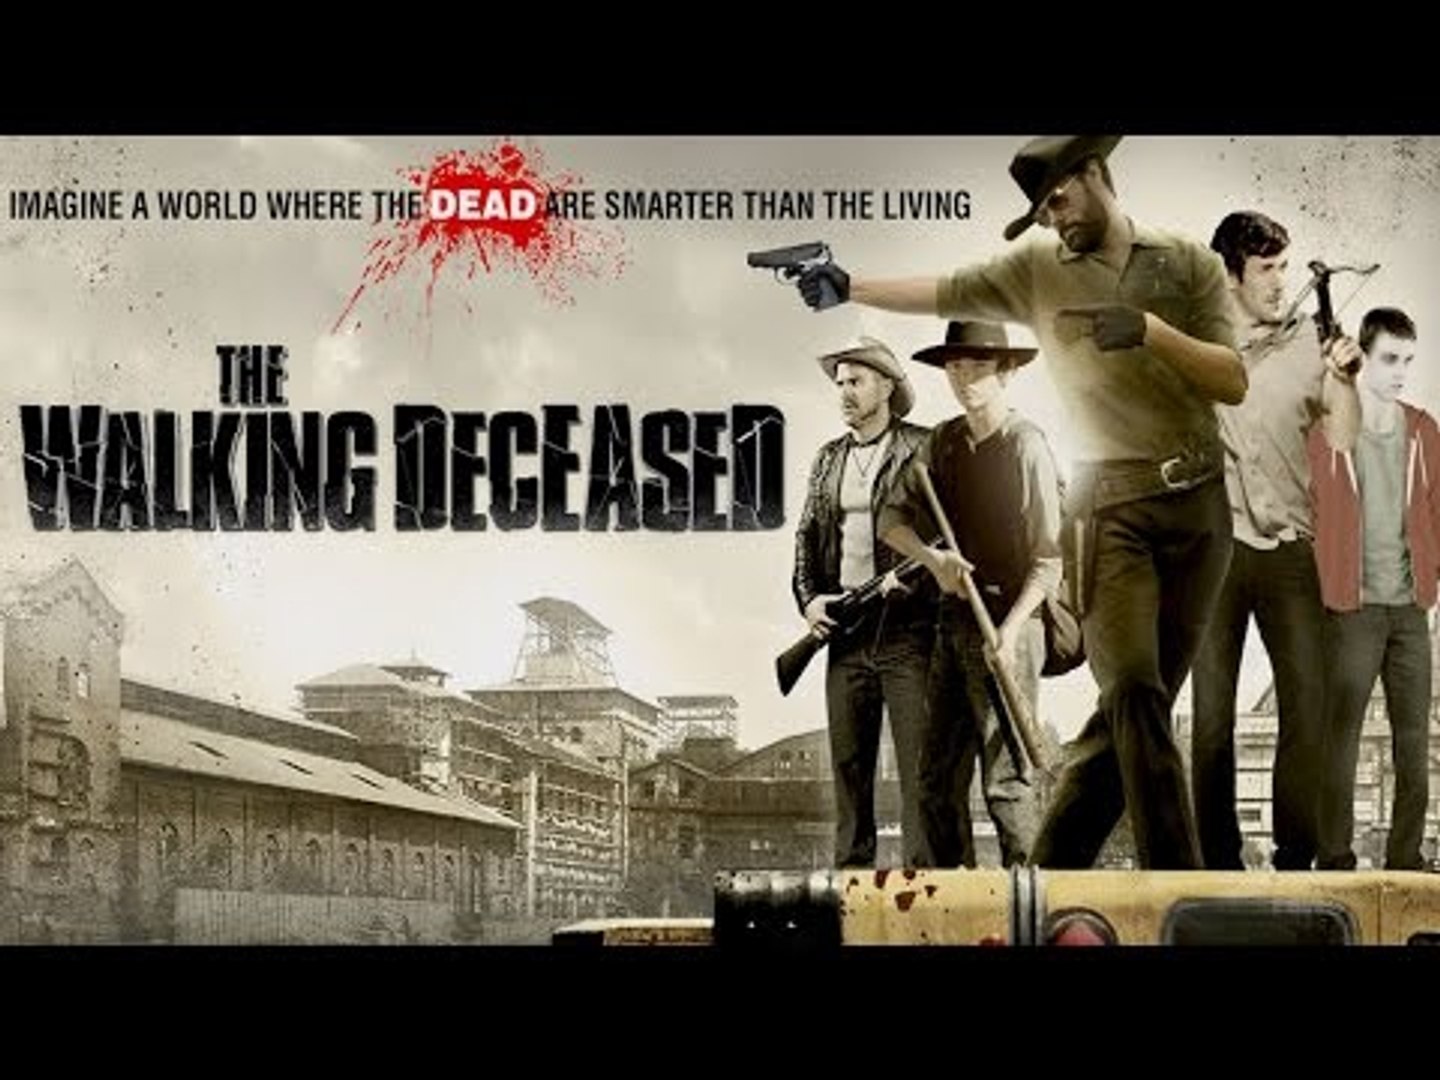 THE WALKING DECEASED Trailer (The Walking Dead Spoof Movie - 2015) - video  Dailymotion